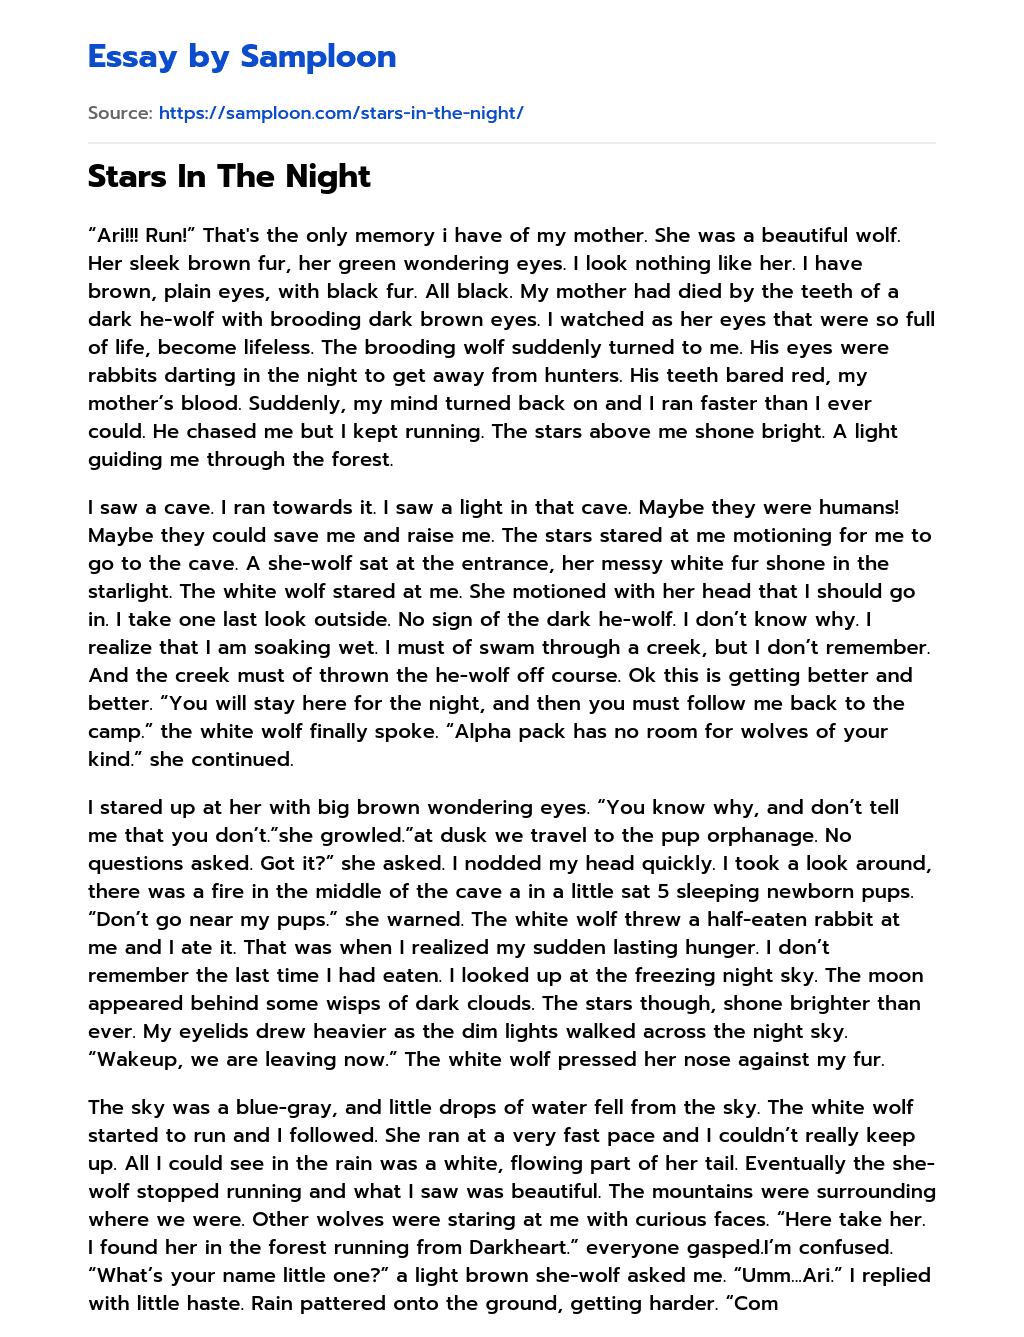 Stars In The Night essay